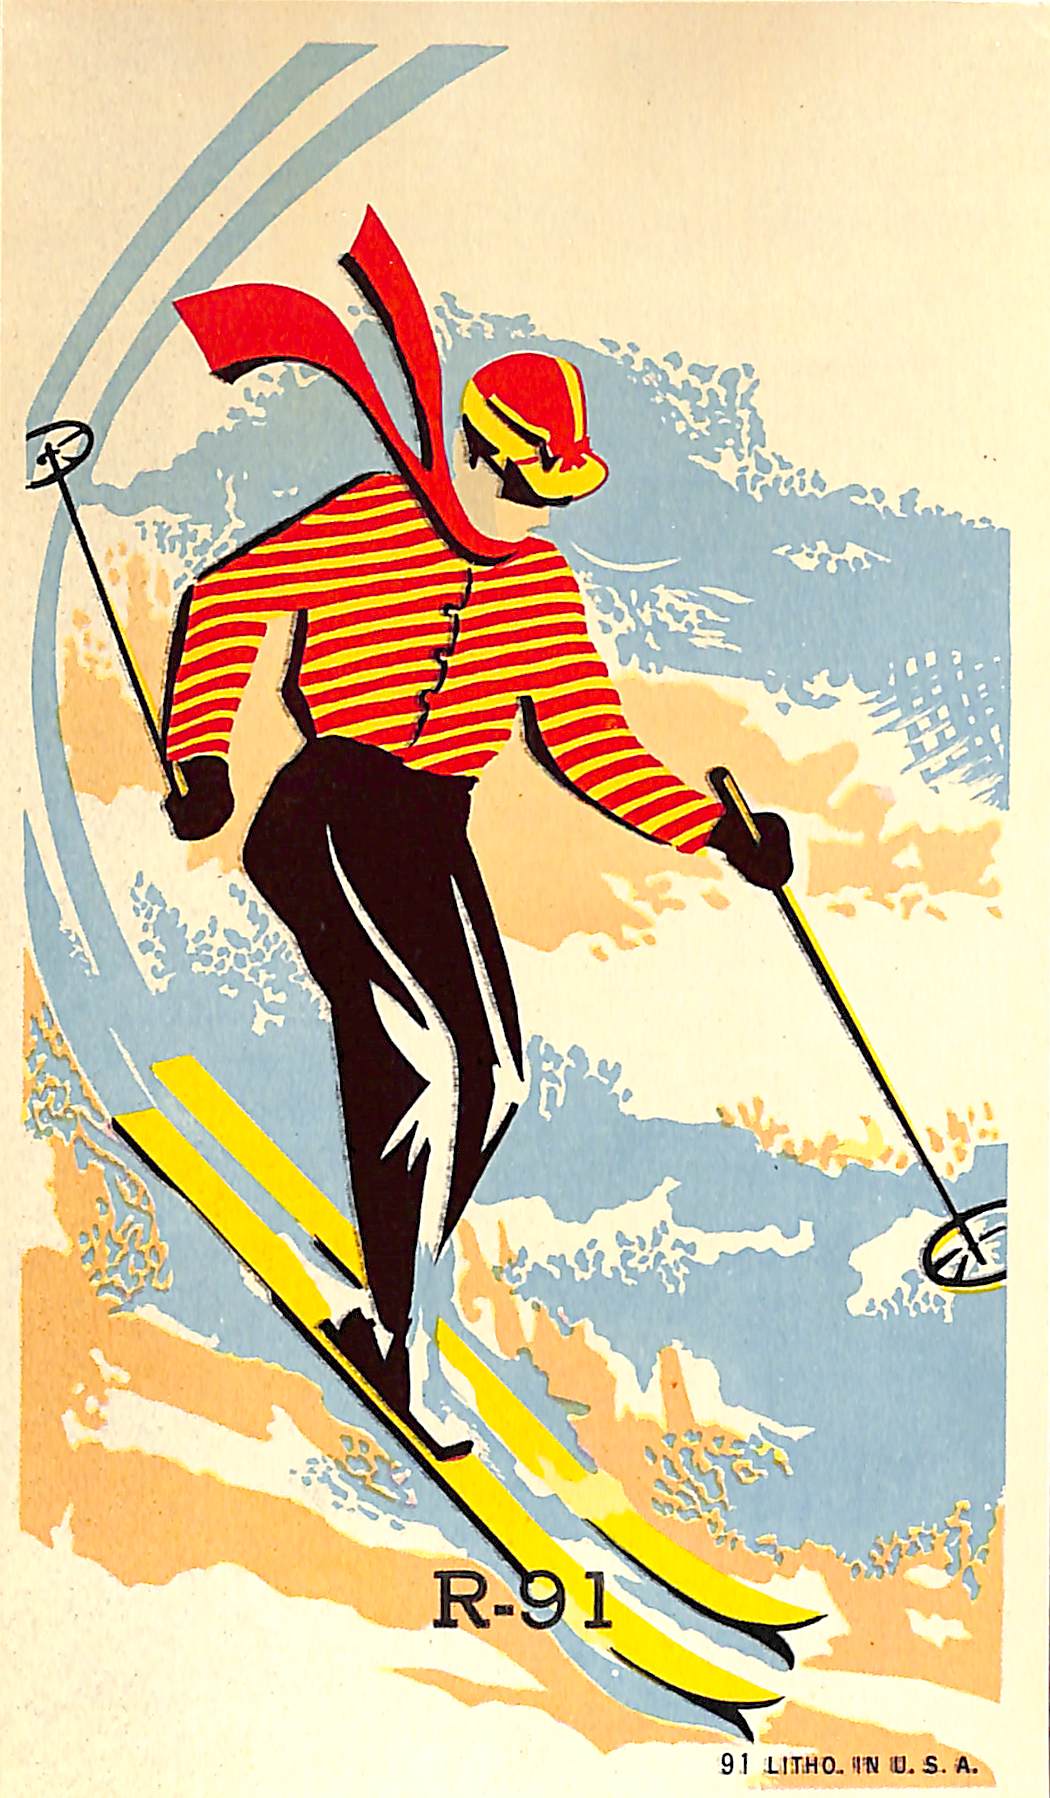 Postcard of Skier R-91